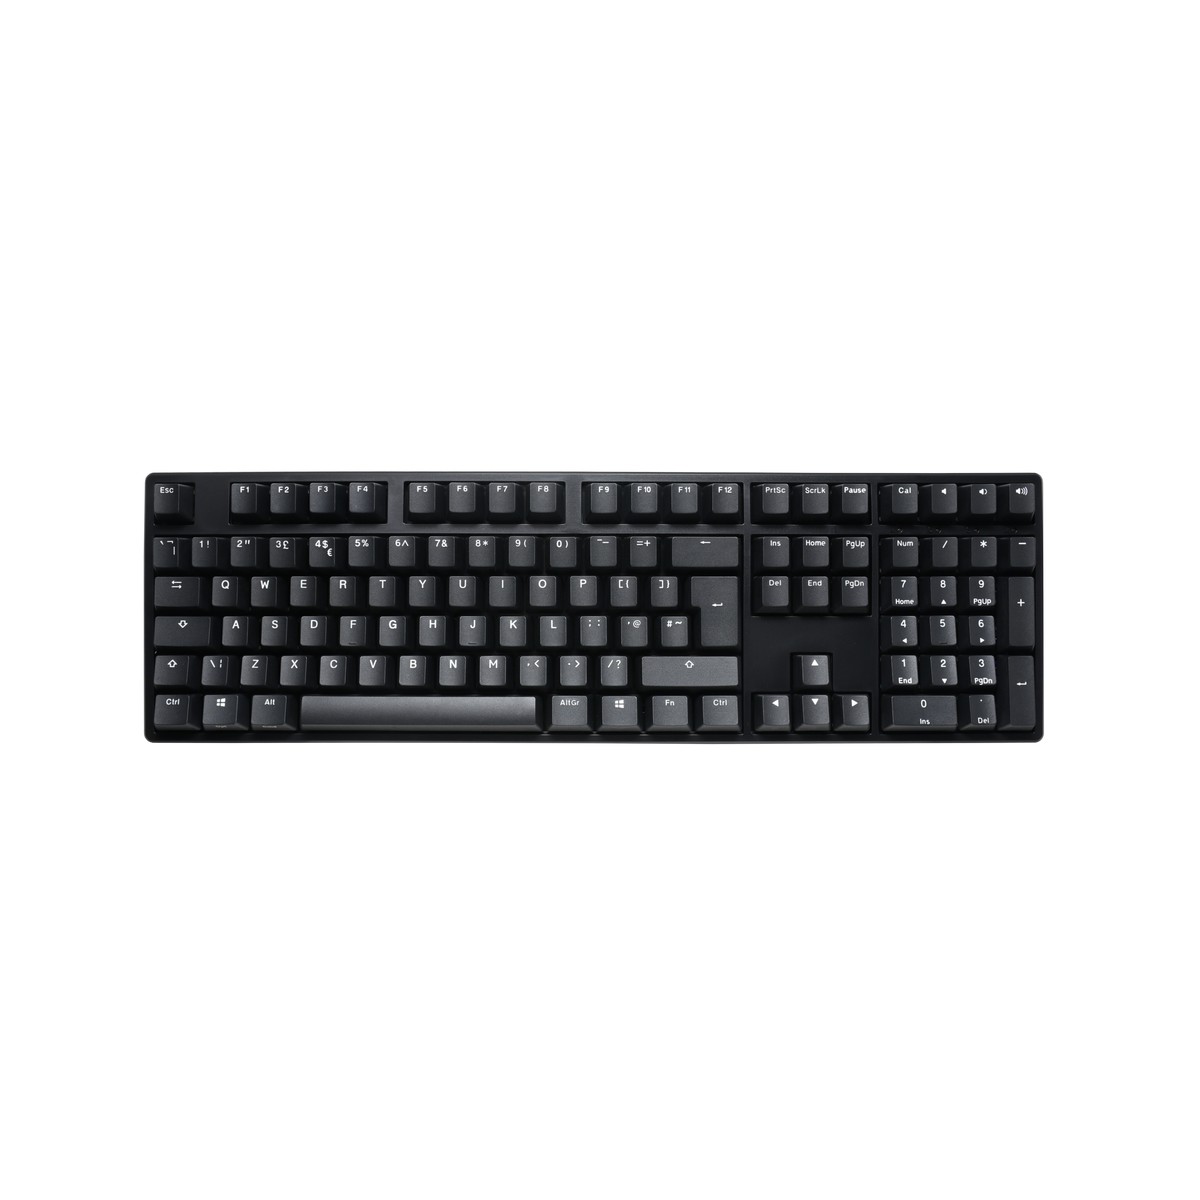 Ducky Origin USB Mechanical Gaming Keyboard Cherry MX Black - Black UK Layout